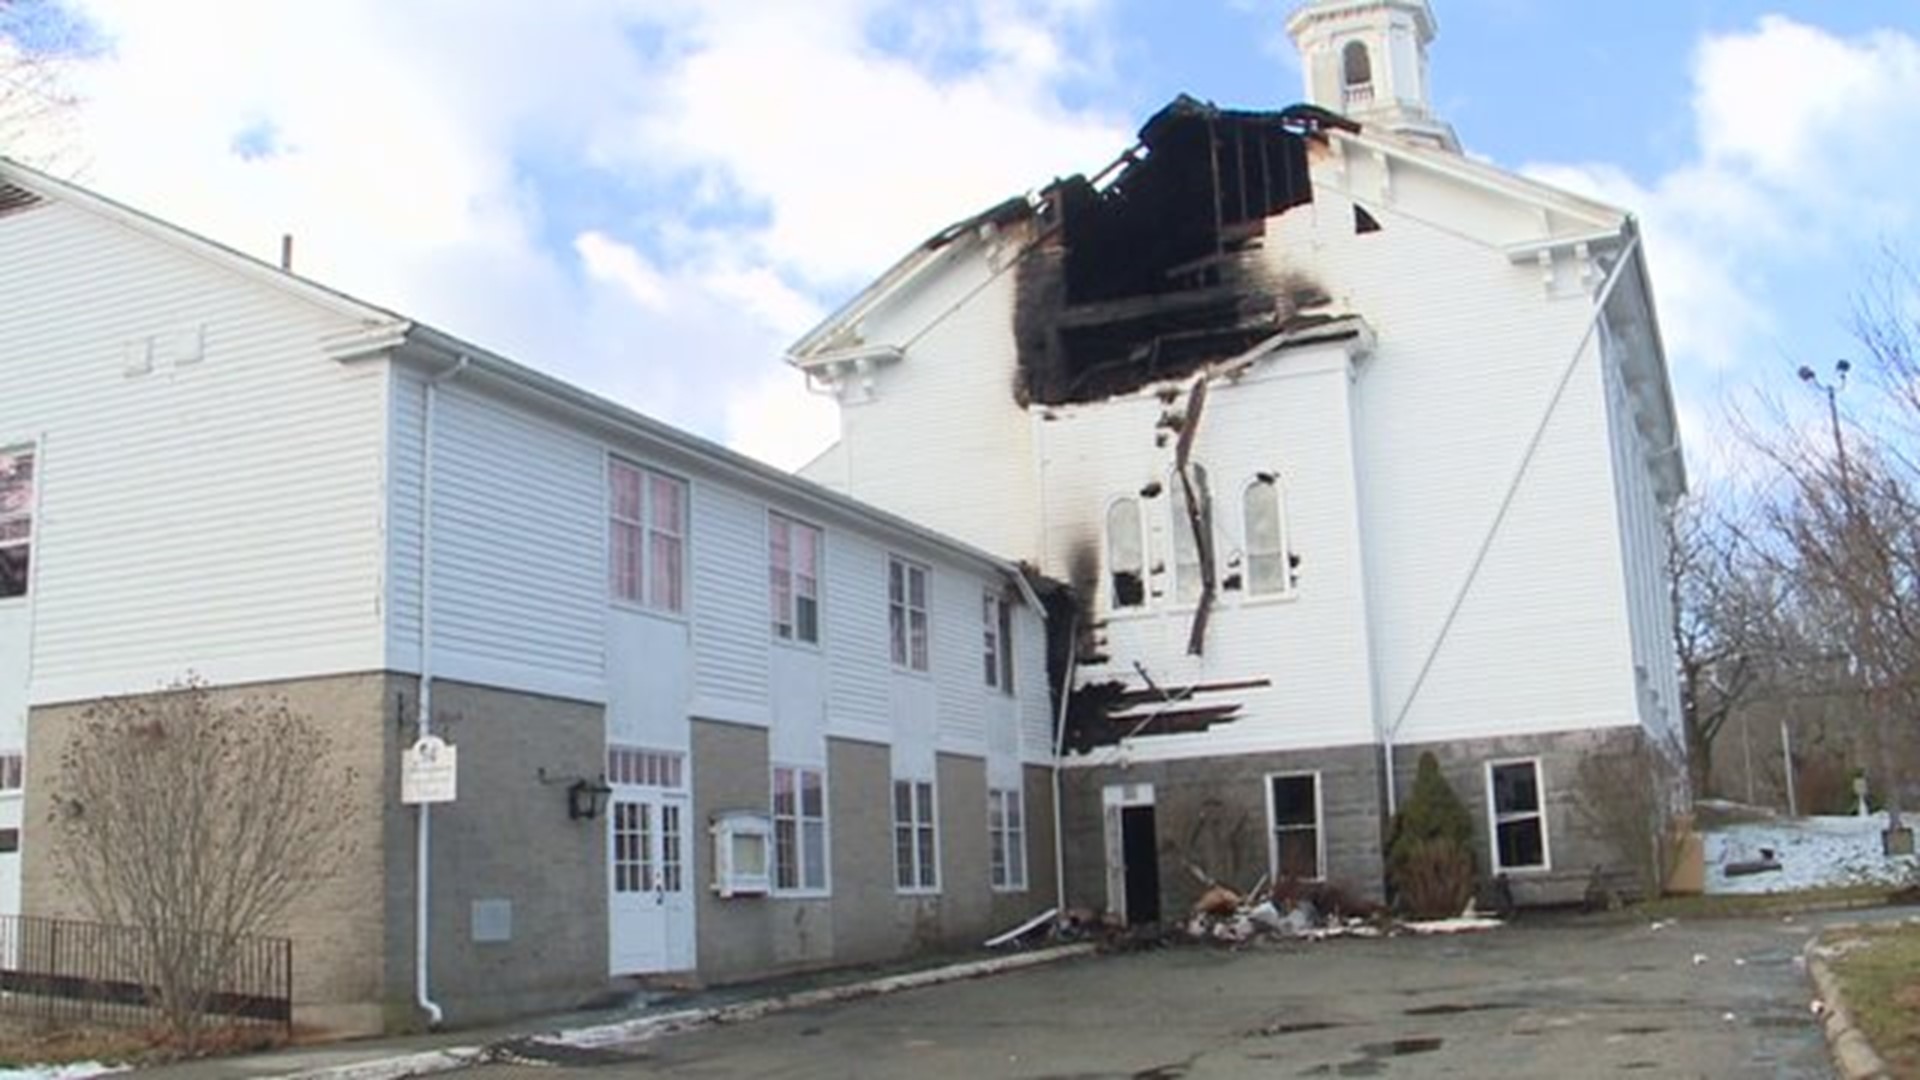 Congregation discusses heartbreak at destruction of Thompson historical church